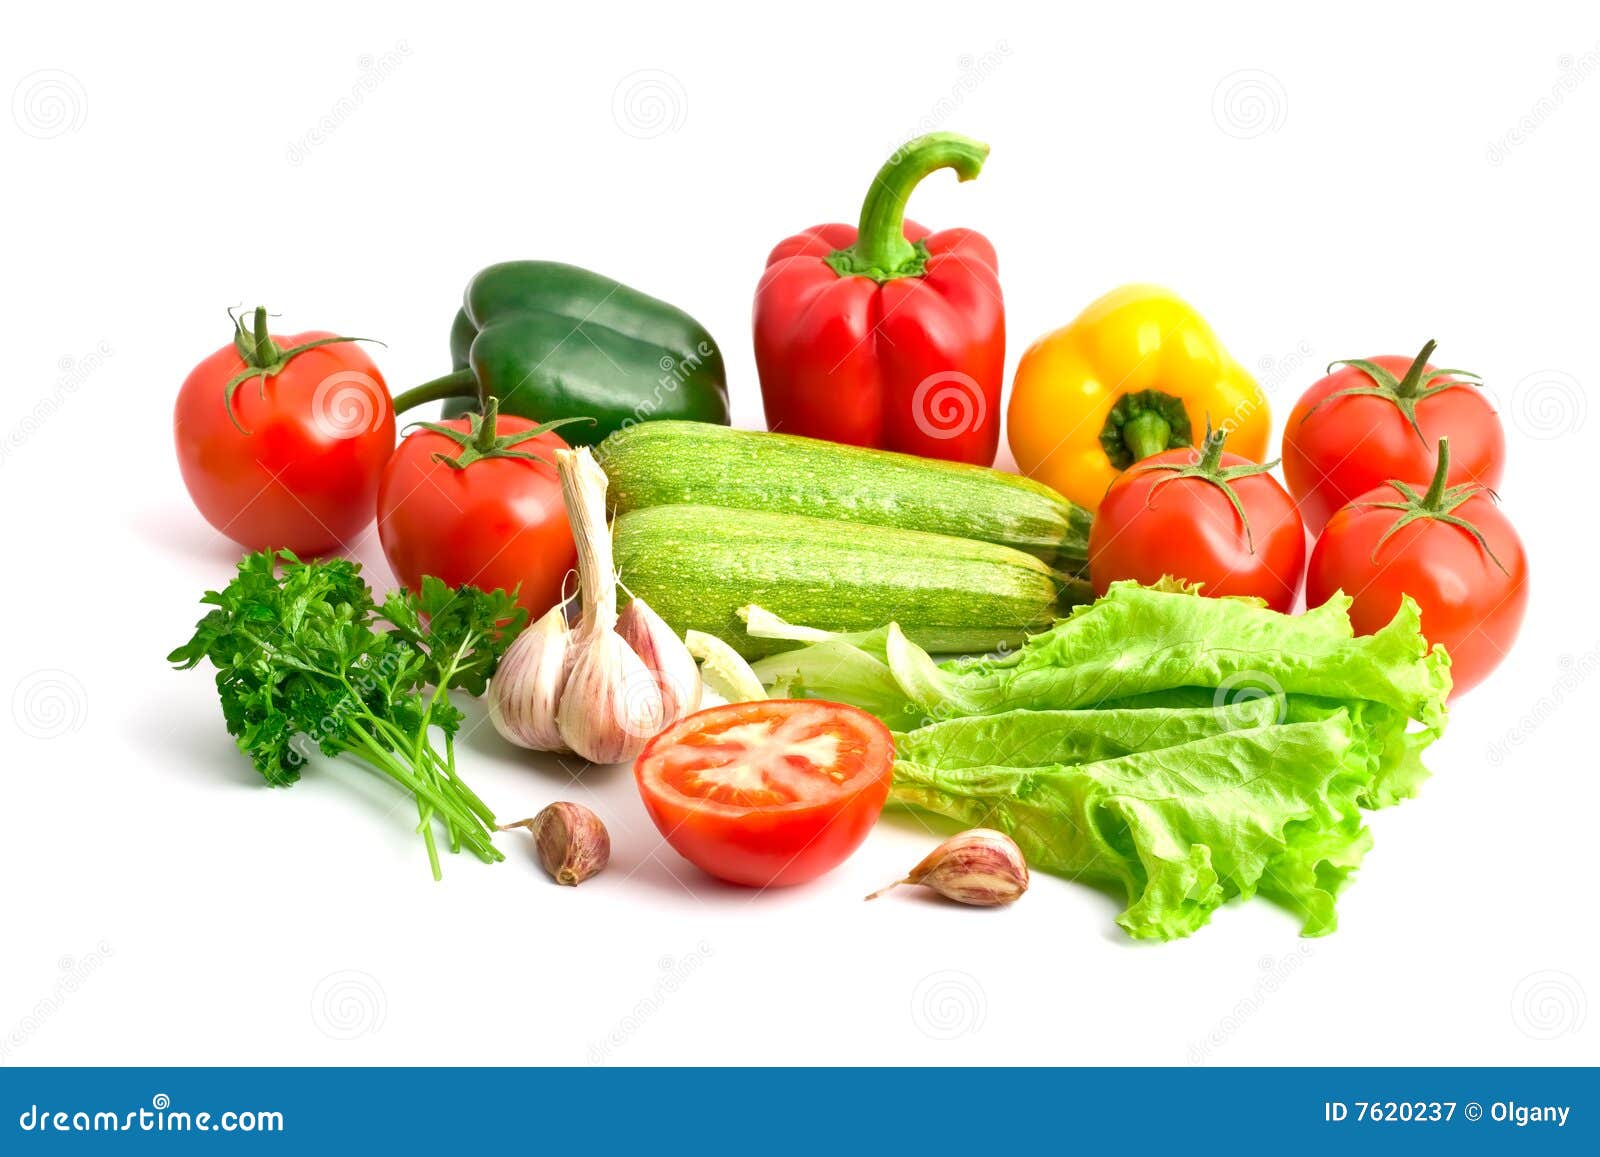 Un Grupo De Diversas Verduras Frescas Imagen de archivo - Imagen